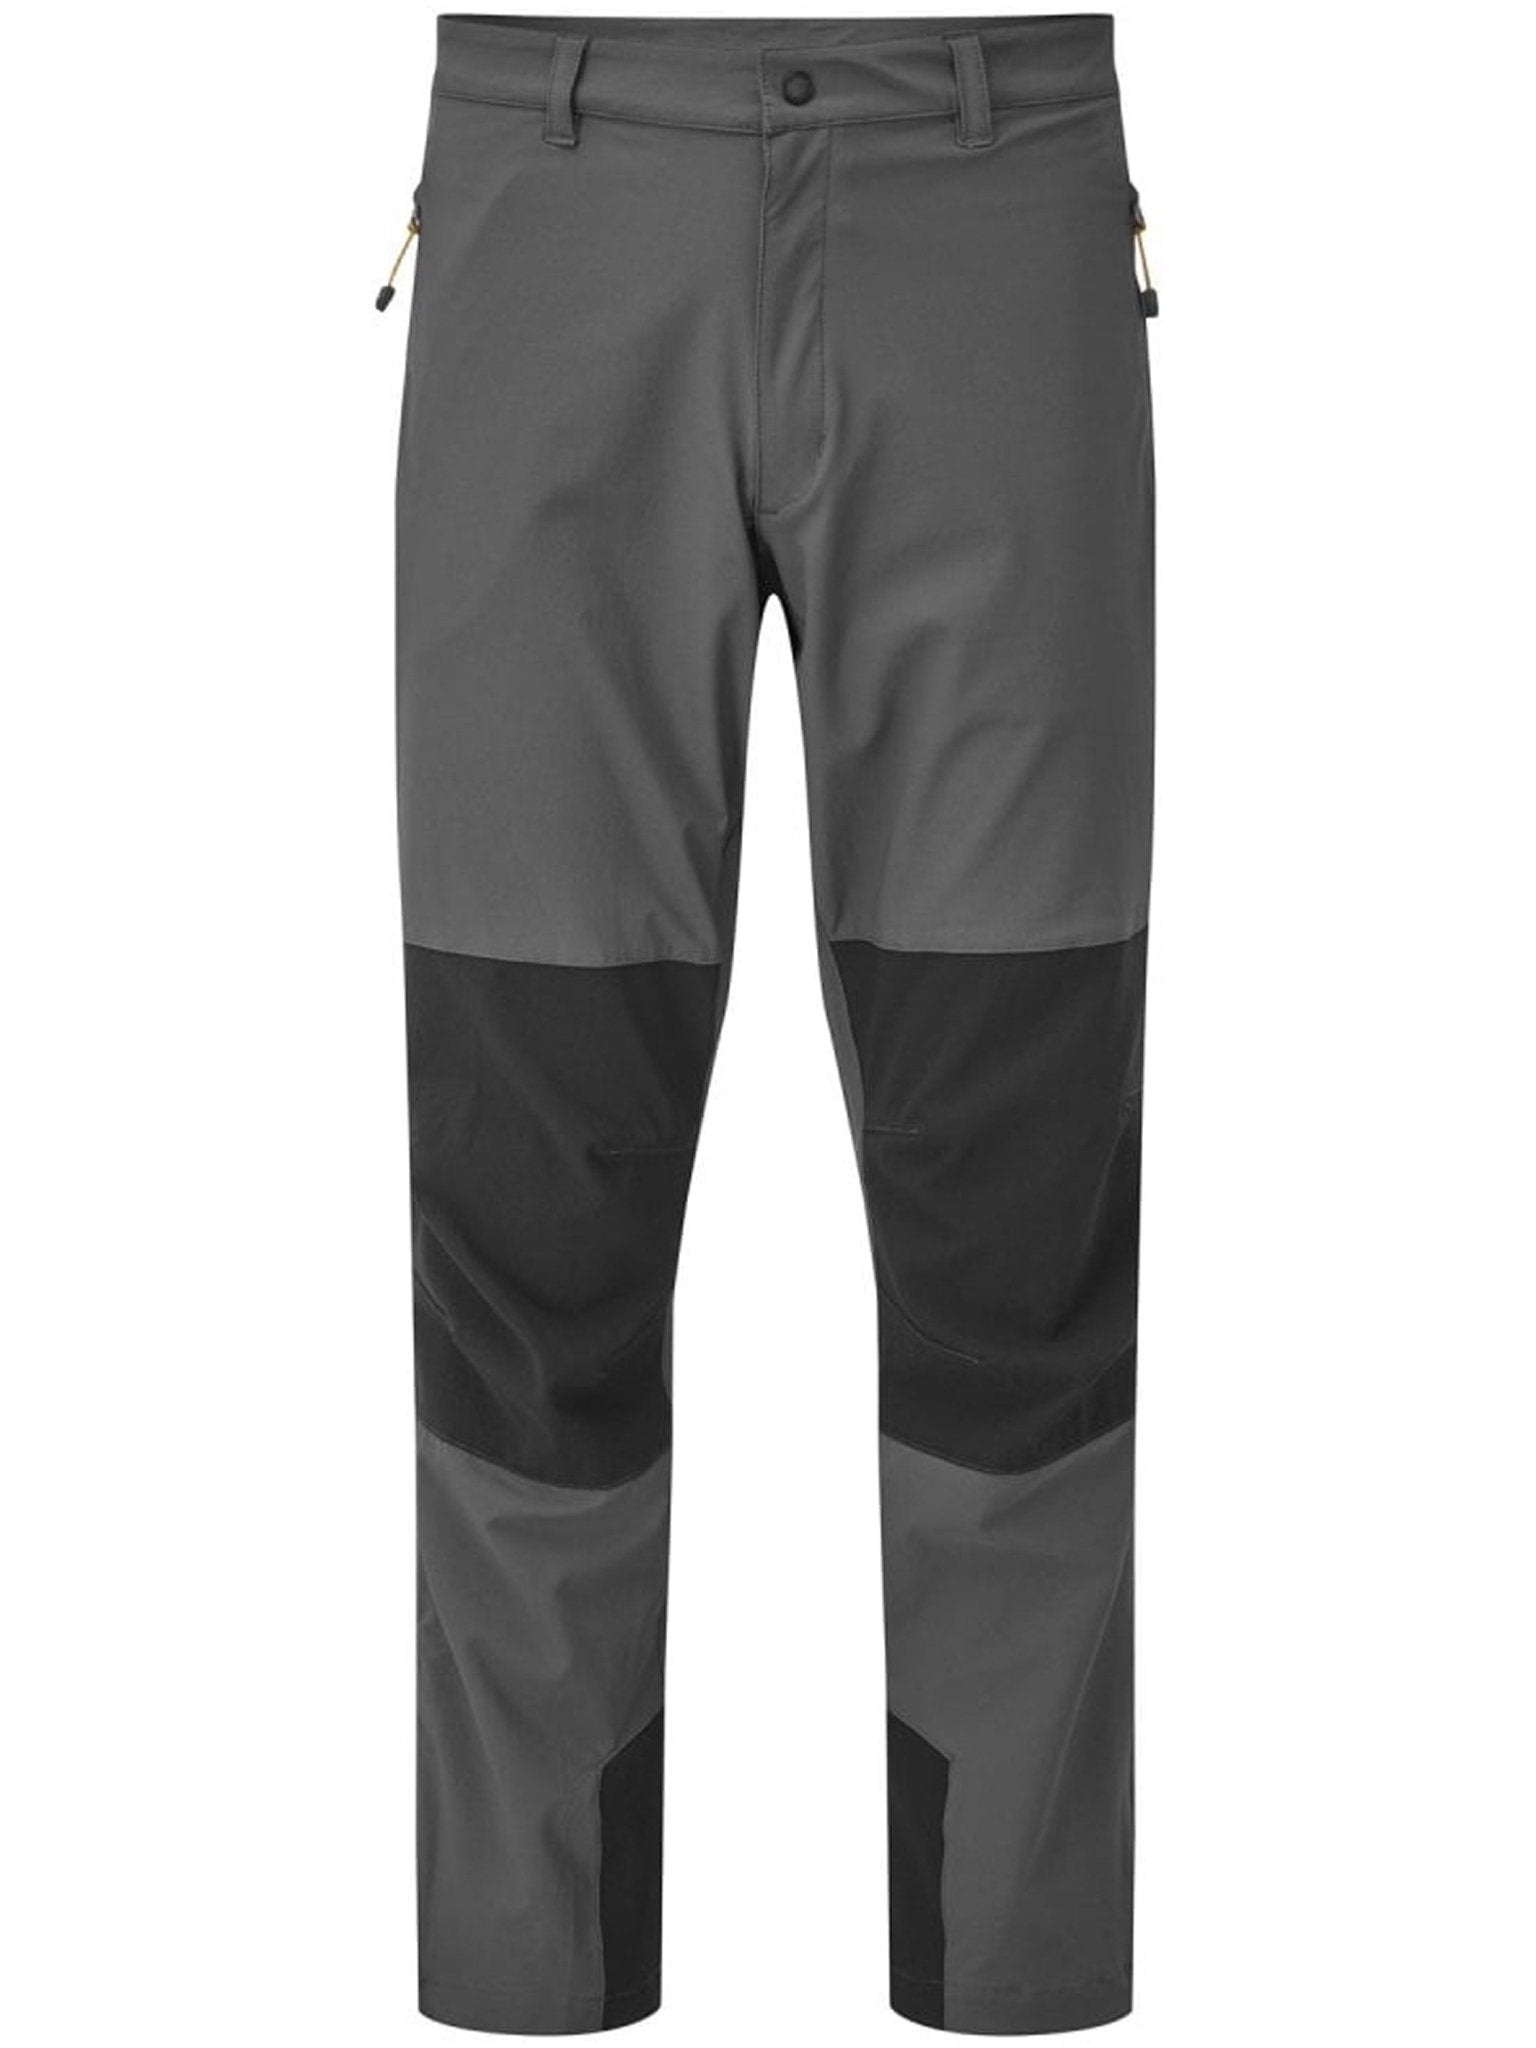 4elementsclothingKeelaKeela Outdoors - Keela Nevis Trousers - Nevis Trouser Water resistant reinforced knee & Seat zipped pocketsTrousers & Jeans14360-105000-3-514